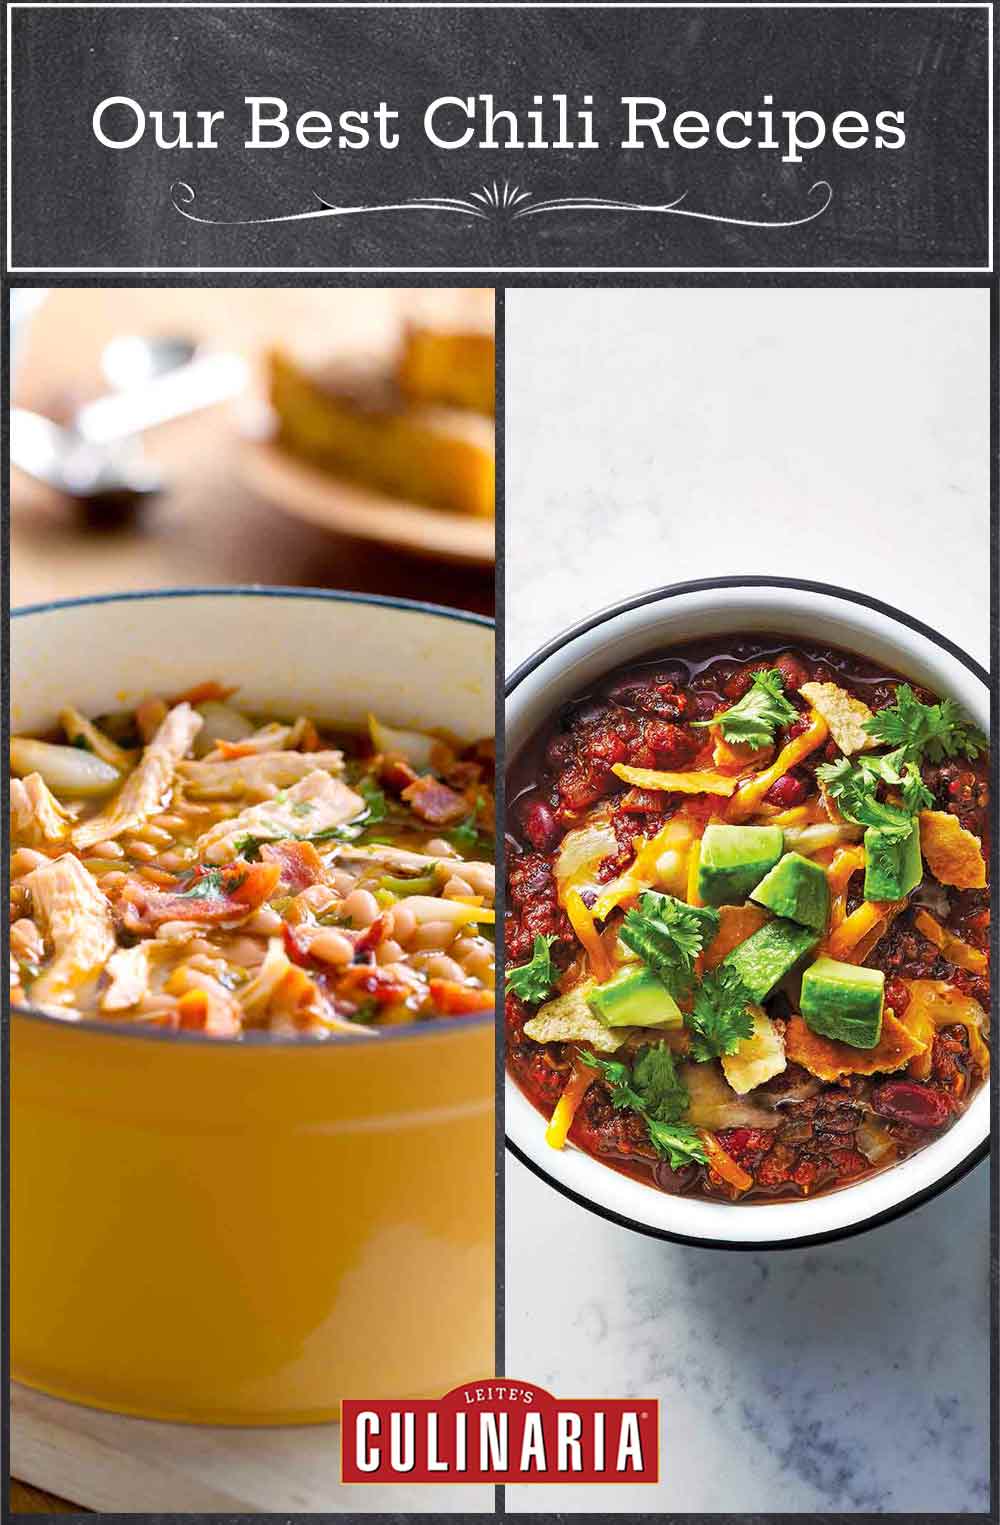 Images of two chili recipes -- white bean and chicken chili and quinoa chili